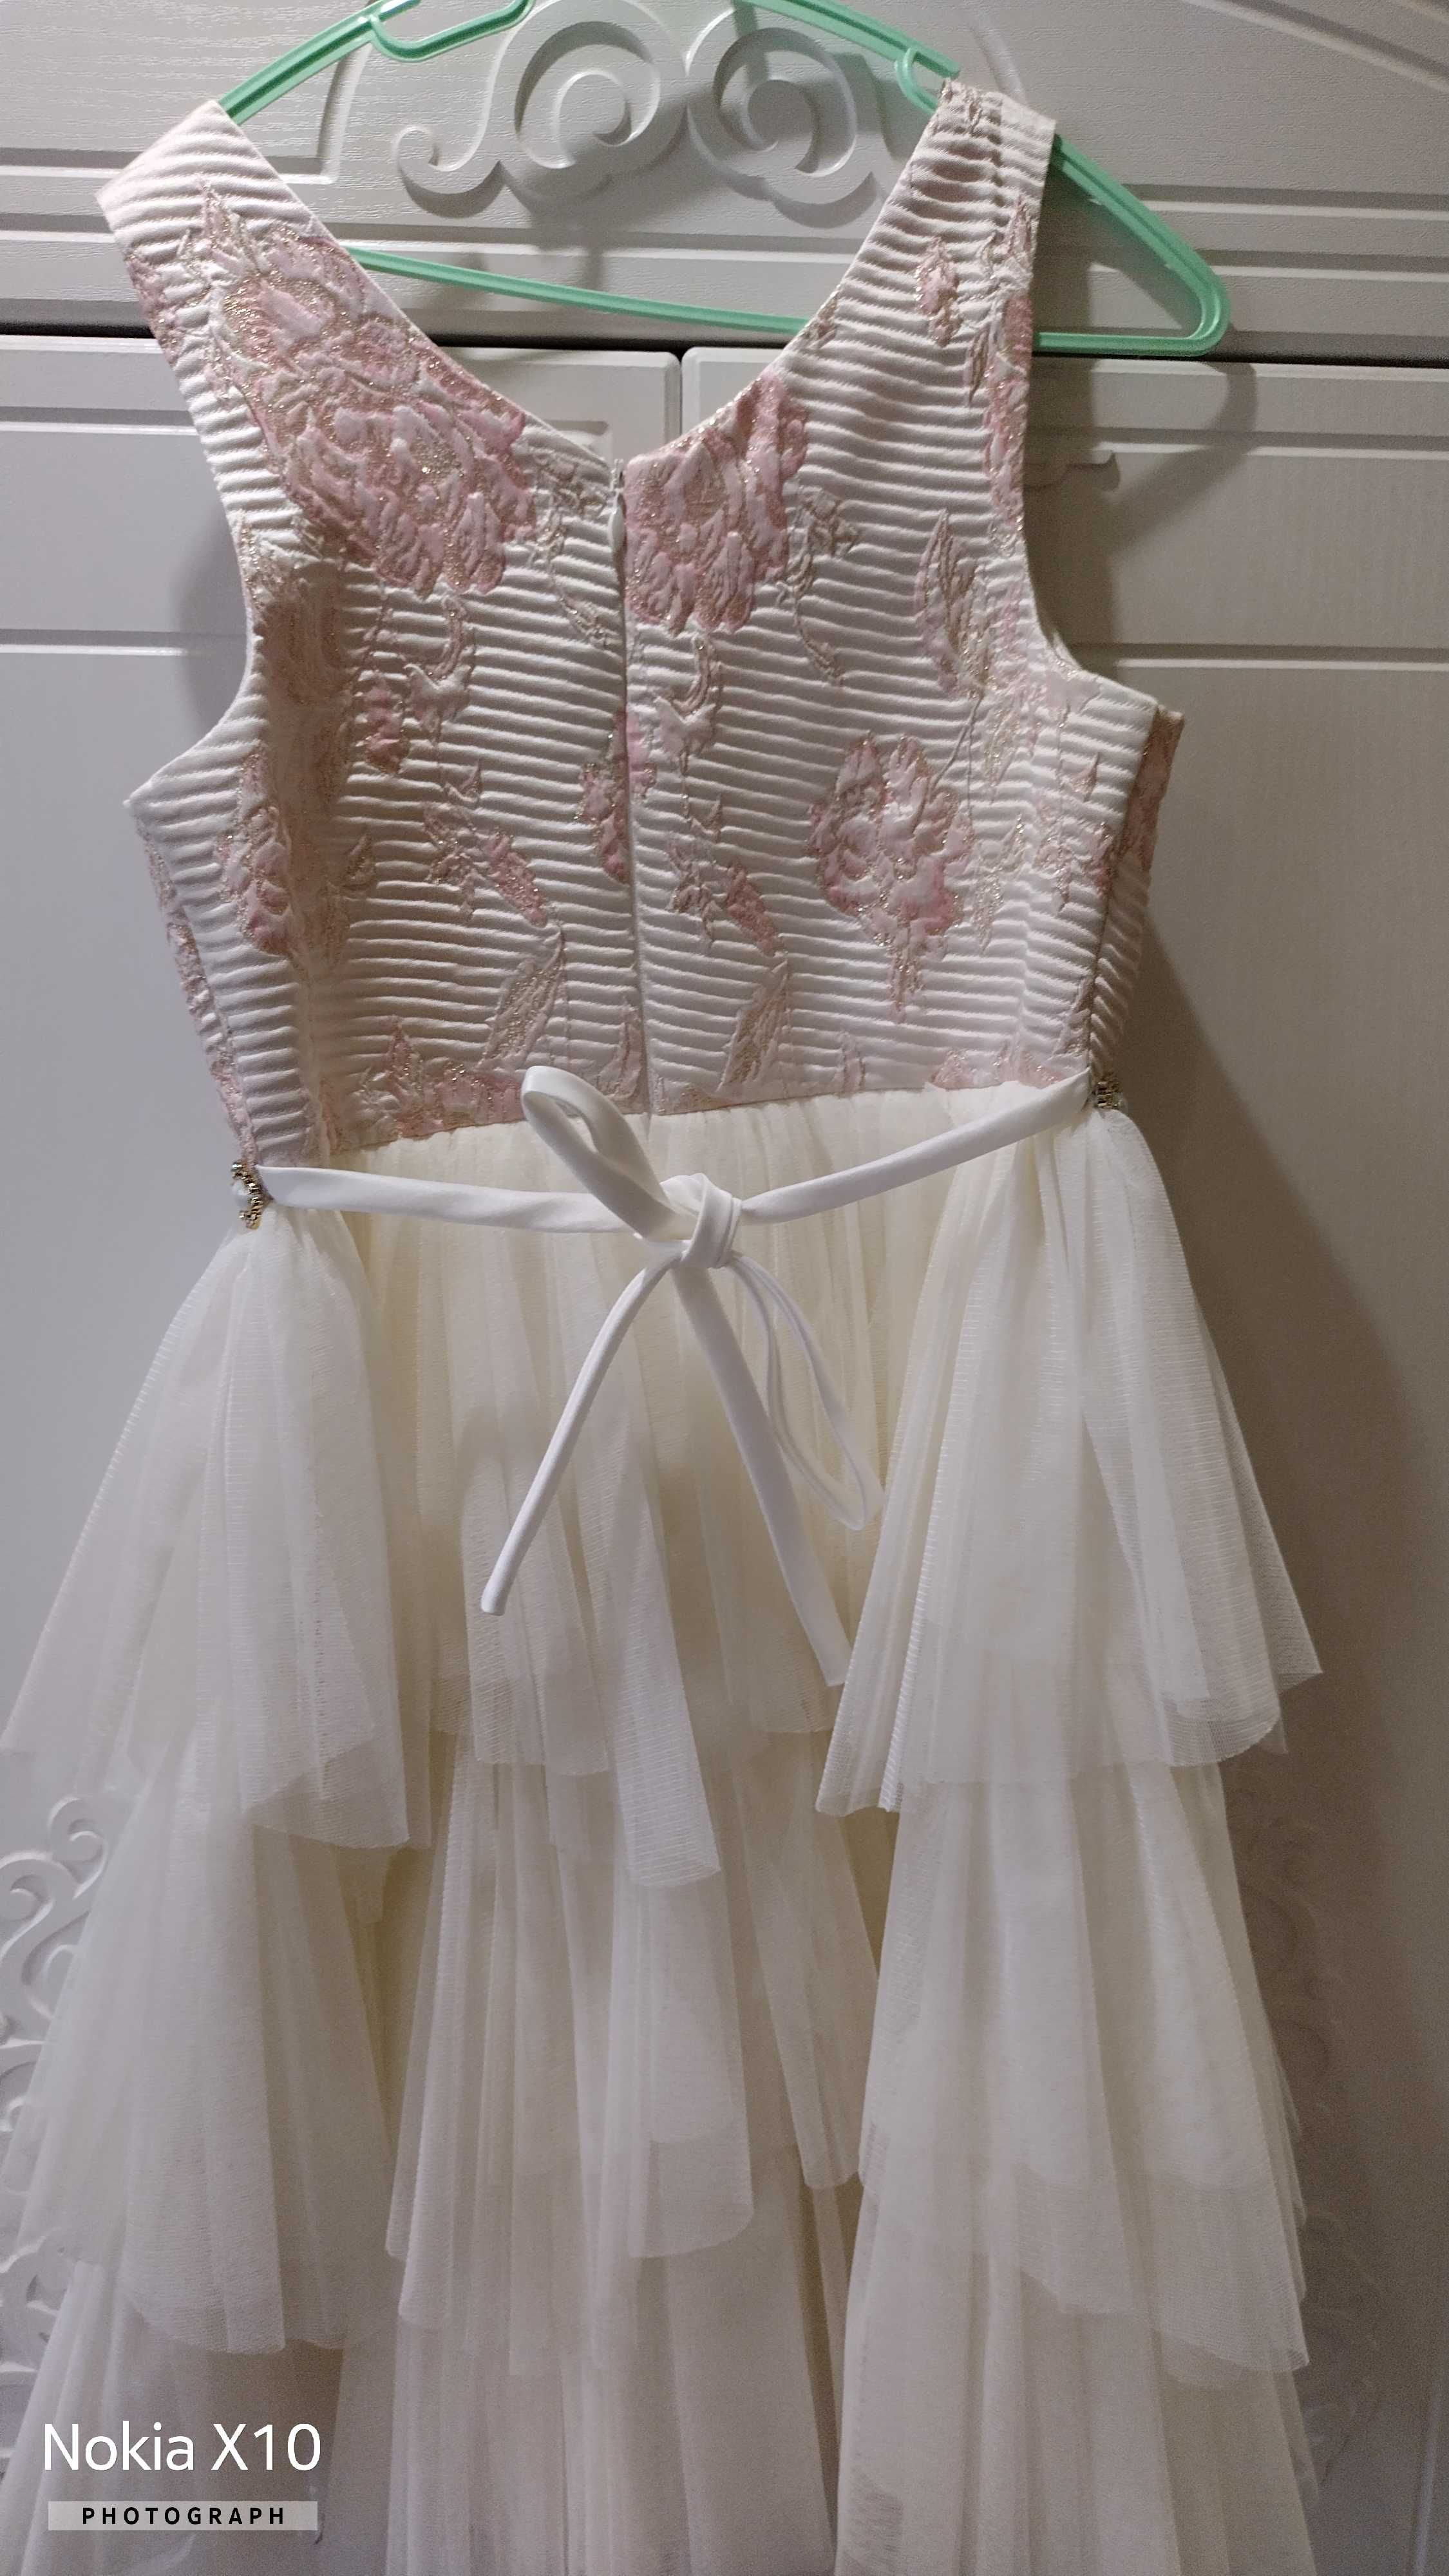 Дитяча розкішна бальна сукня Couture Princess